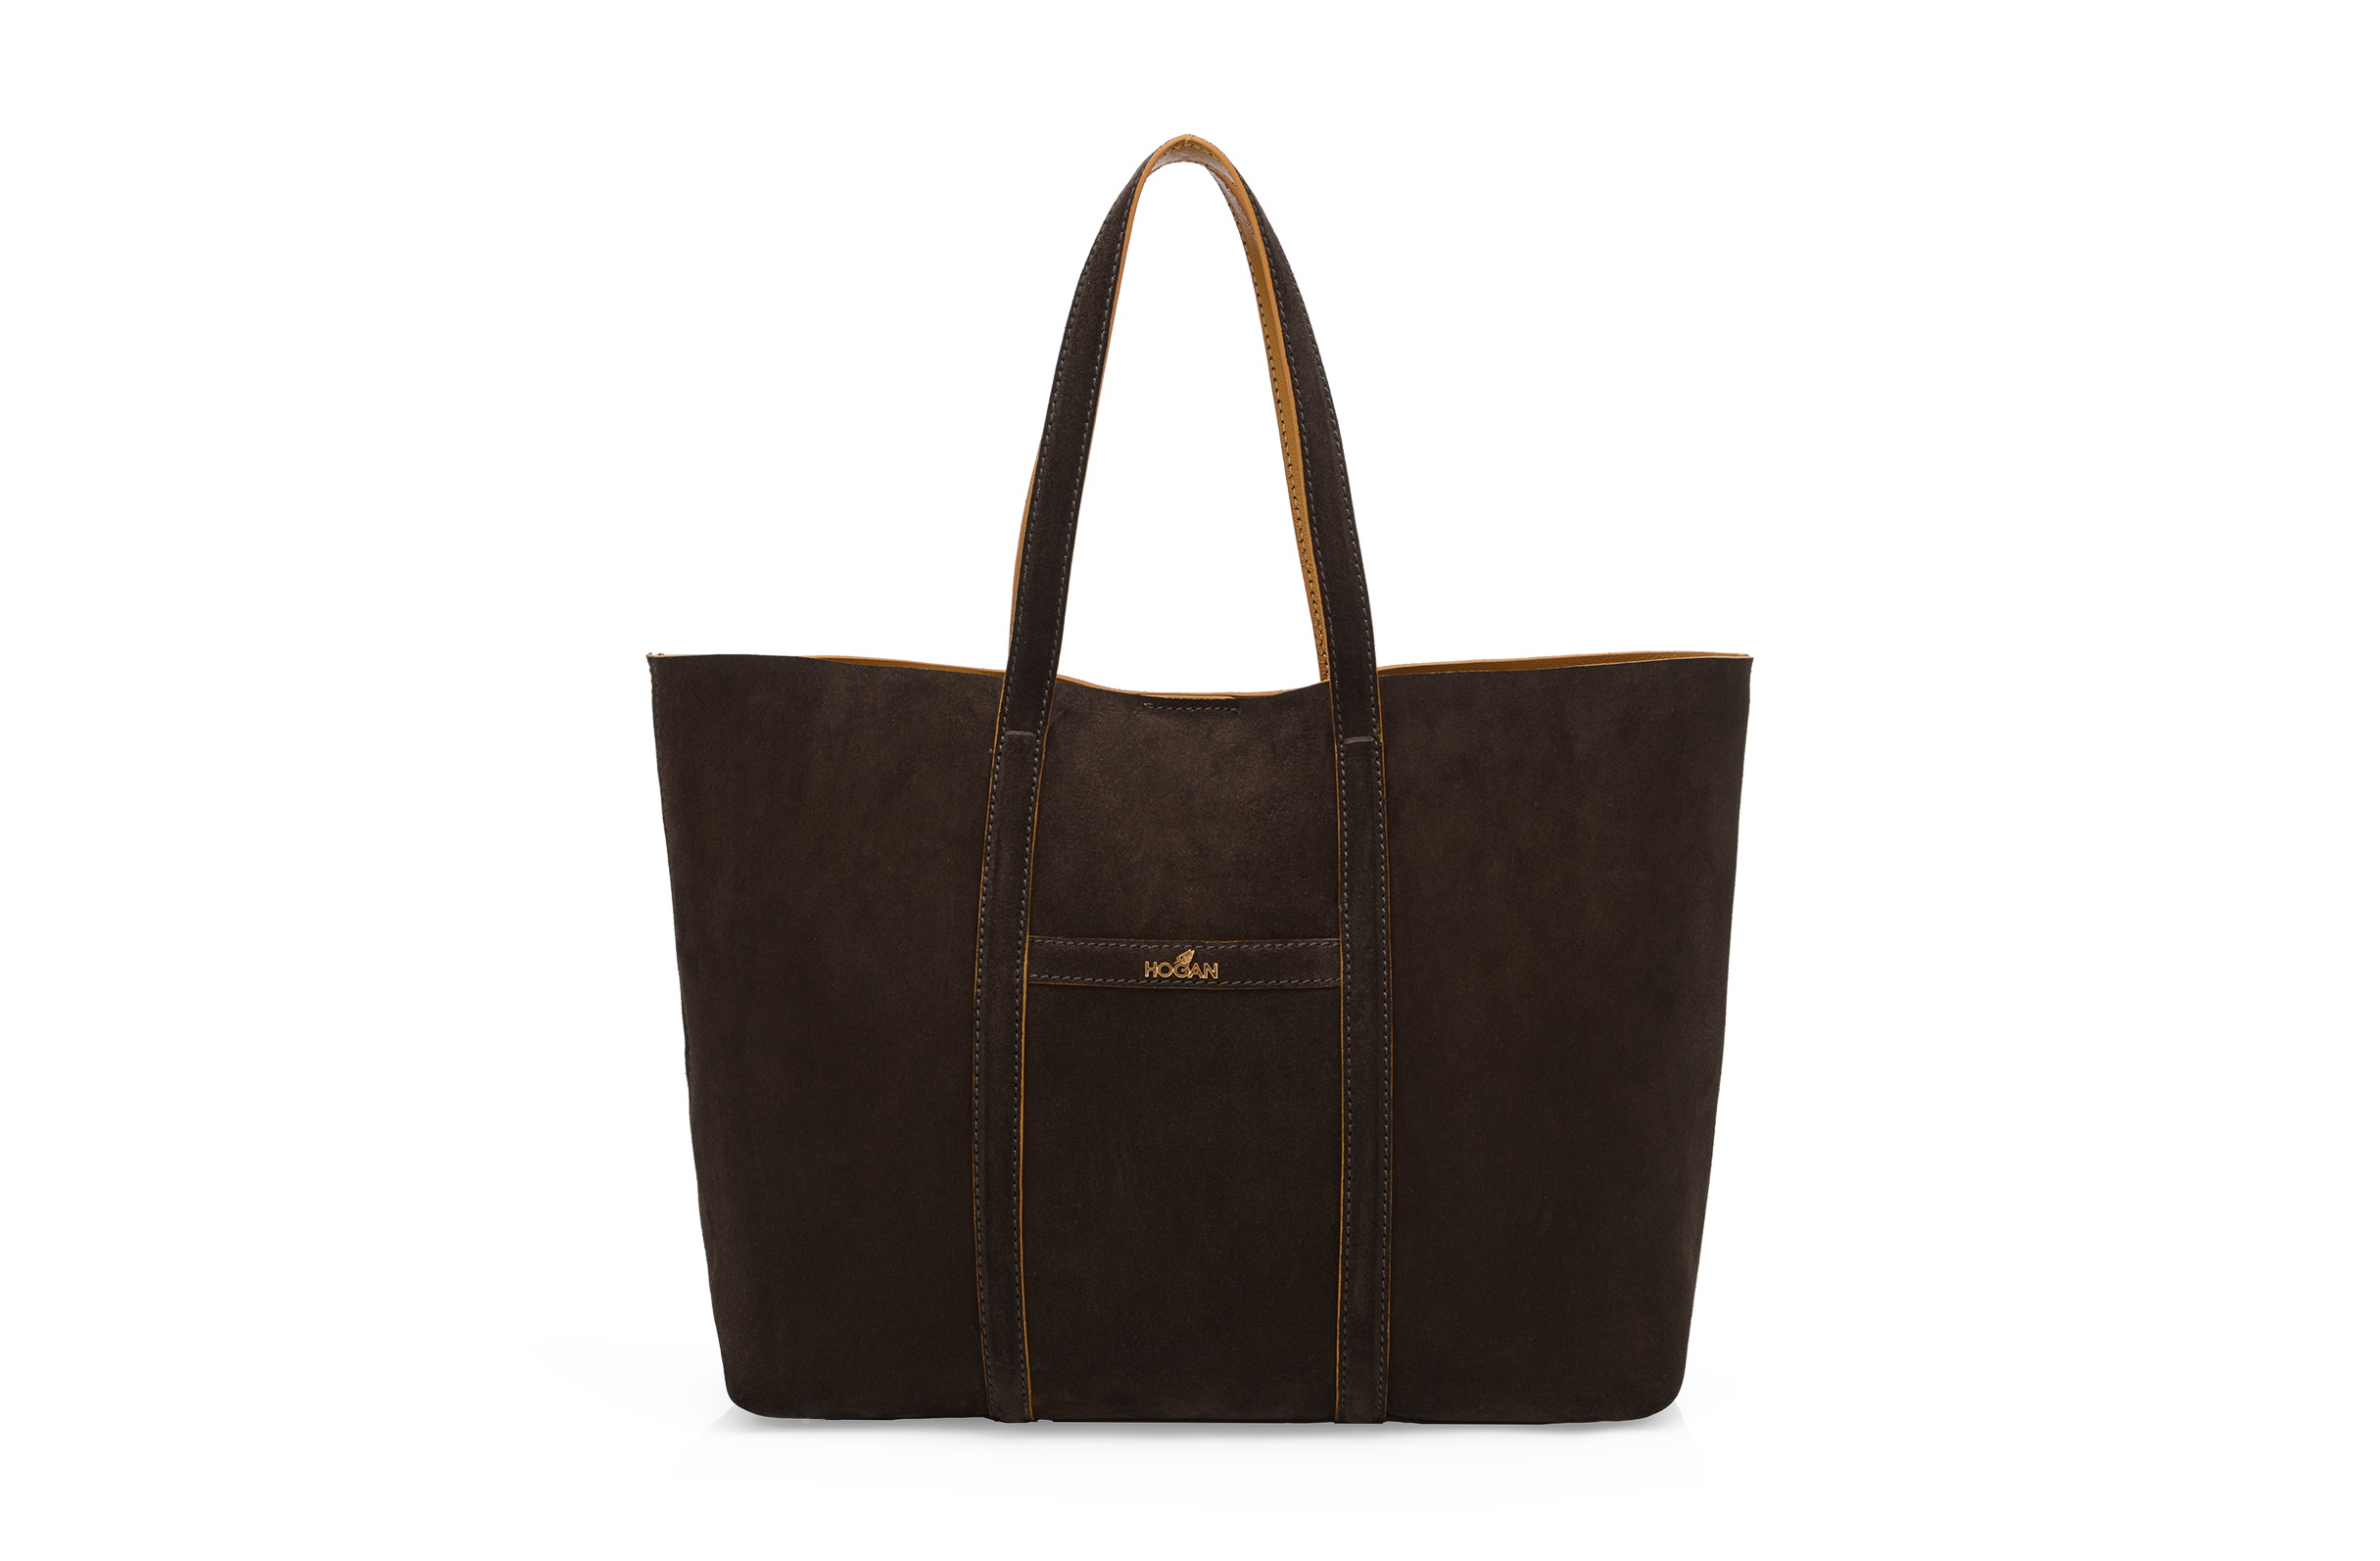 Hogan bags. Hogan women's leather handbag shopping bag purse gold.